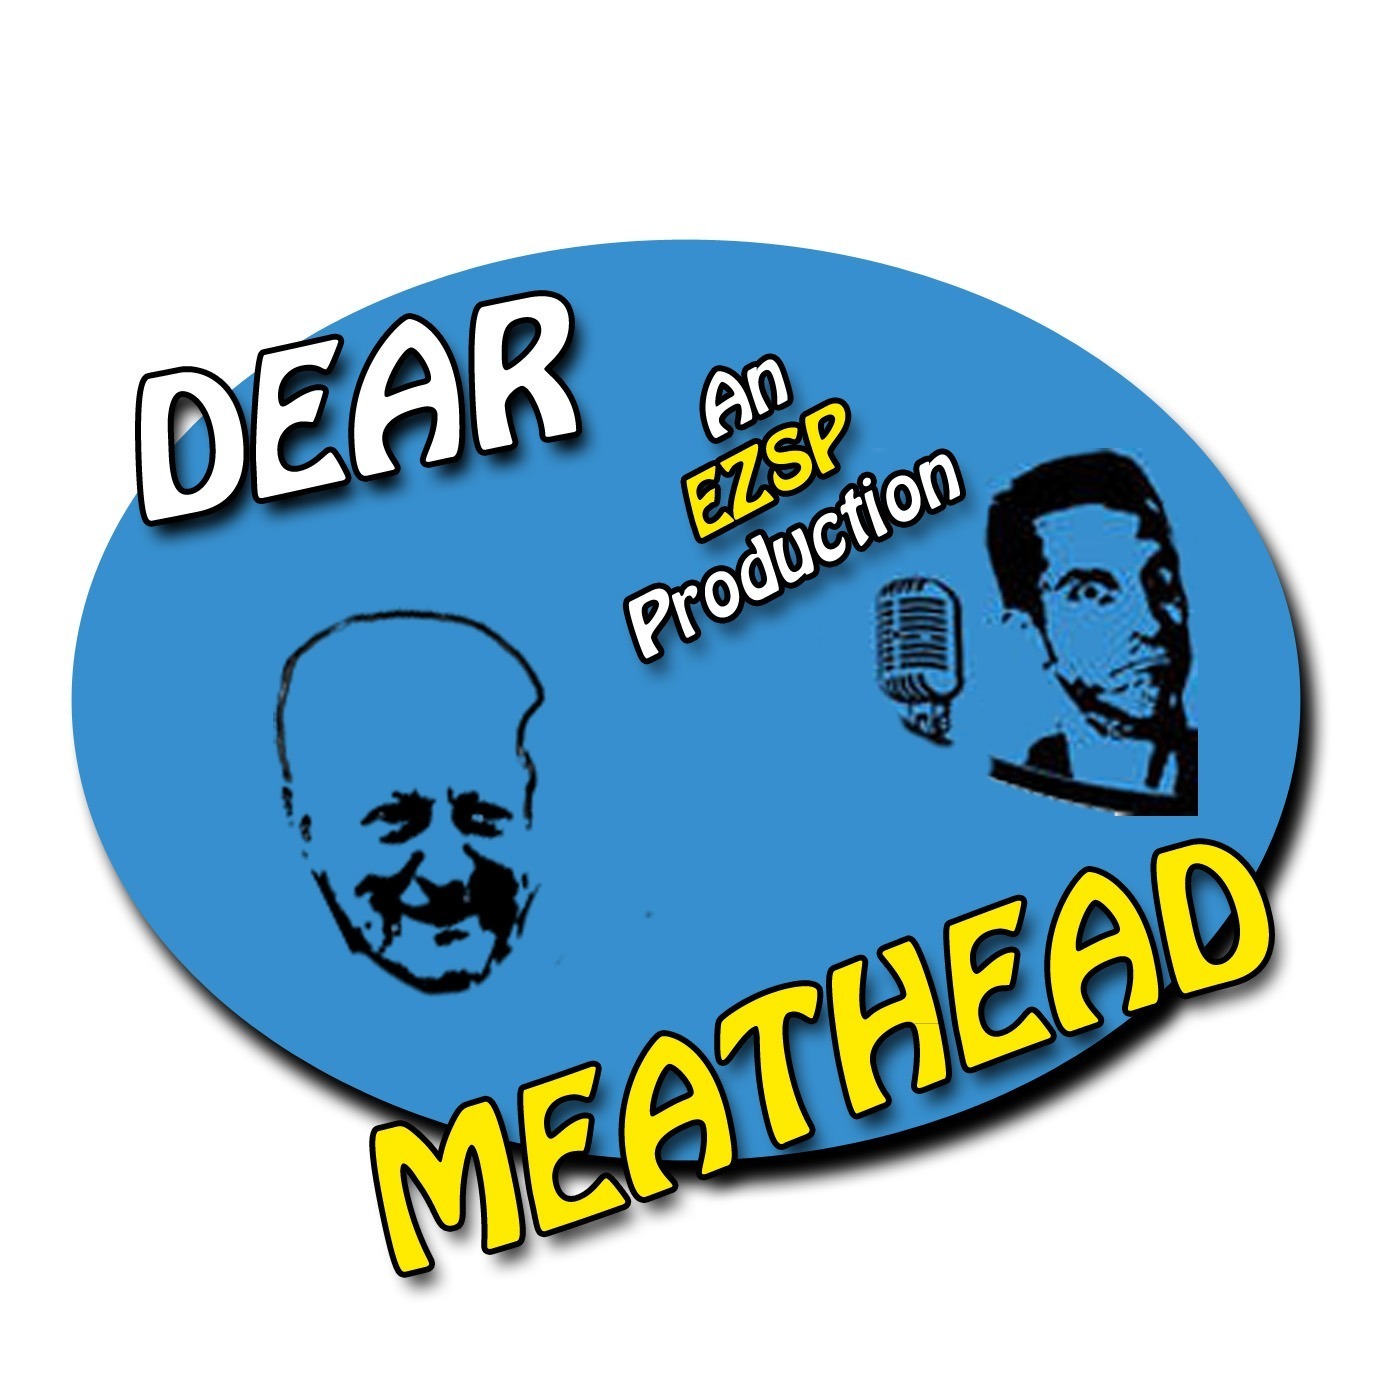 Dear Meathead August 10, 2022 - Dad on COVID shot deniers